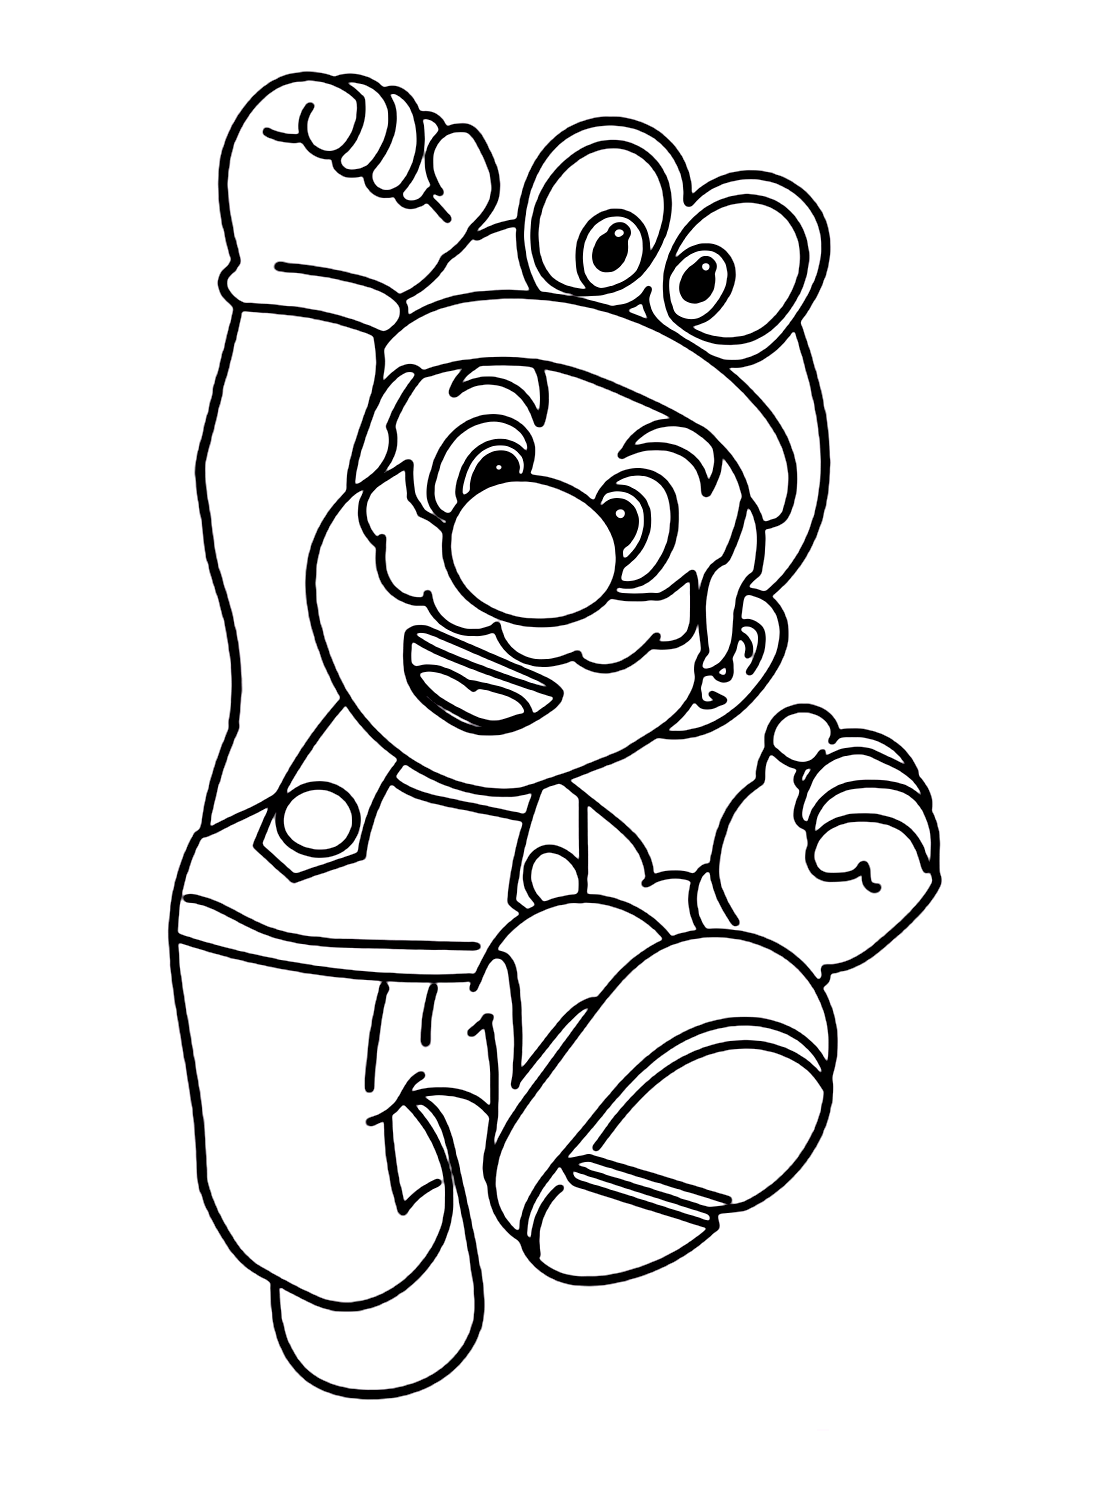 Mario from Super Mario Odyssey Coloring Page